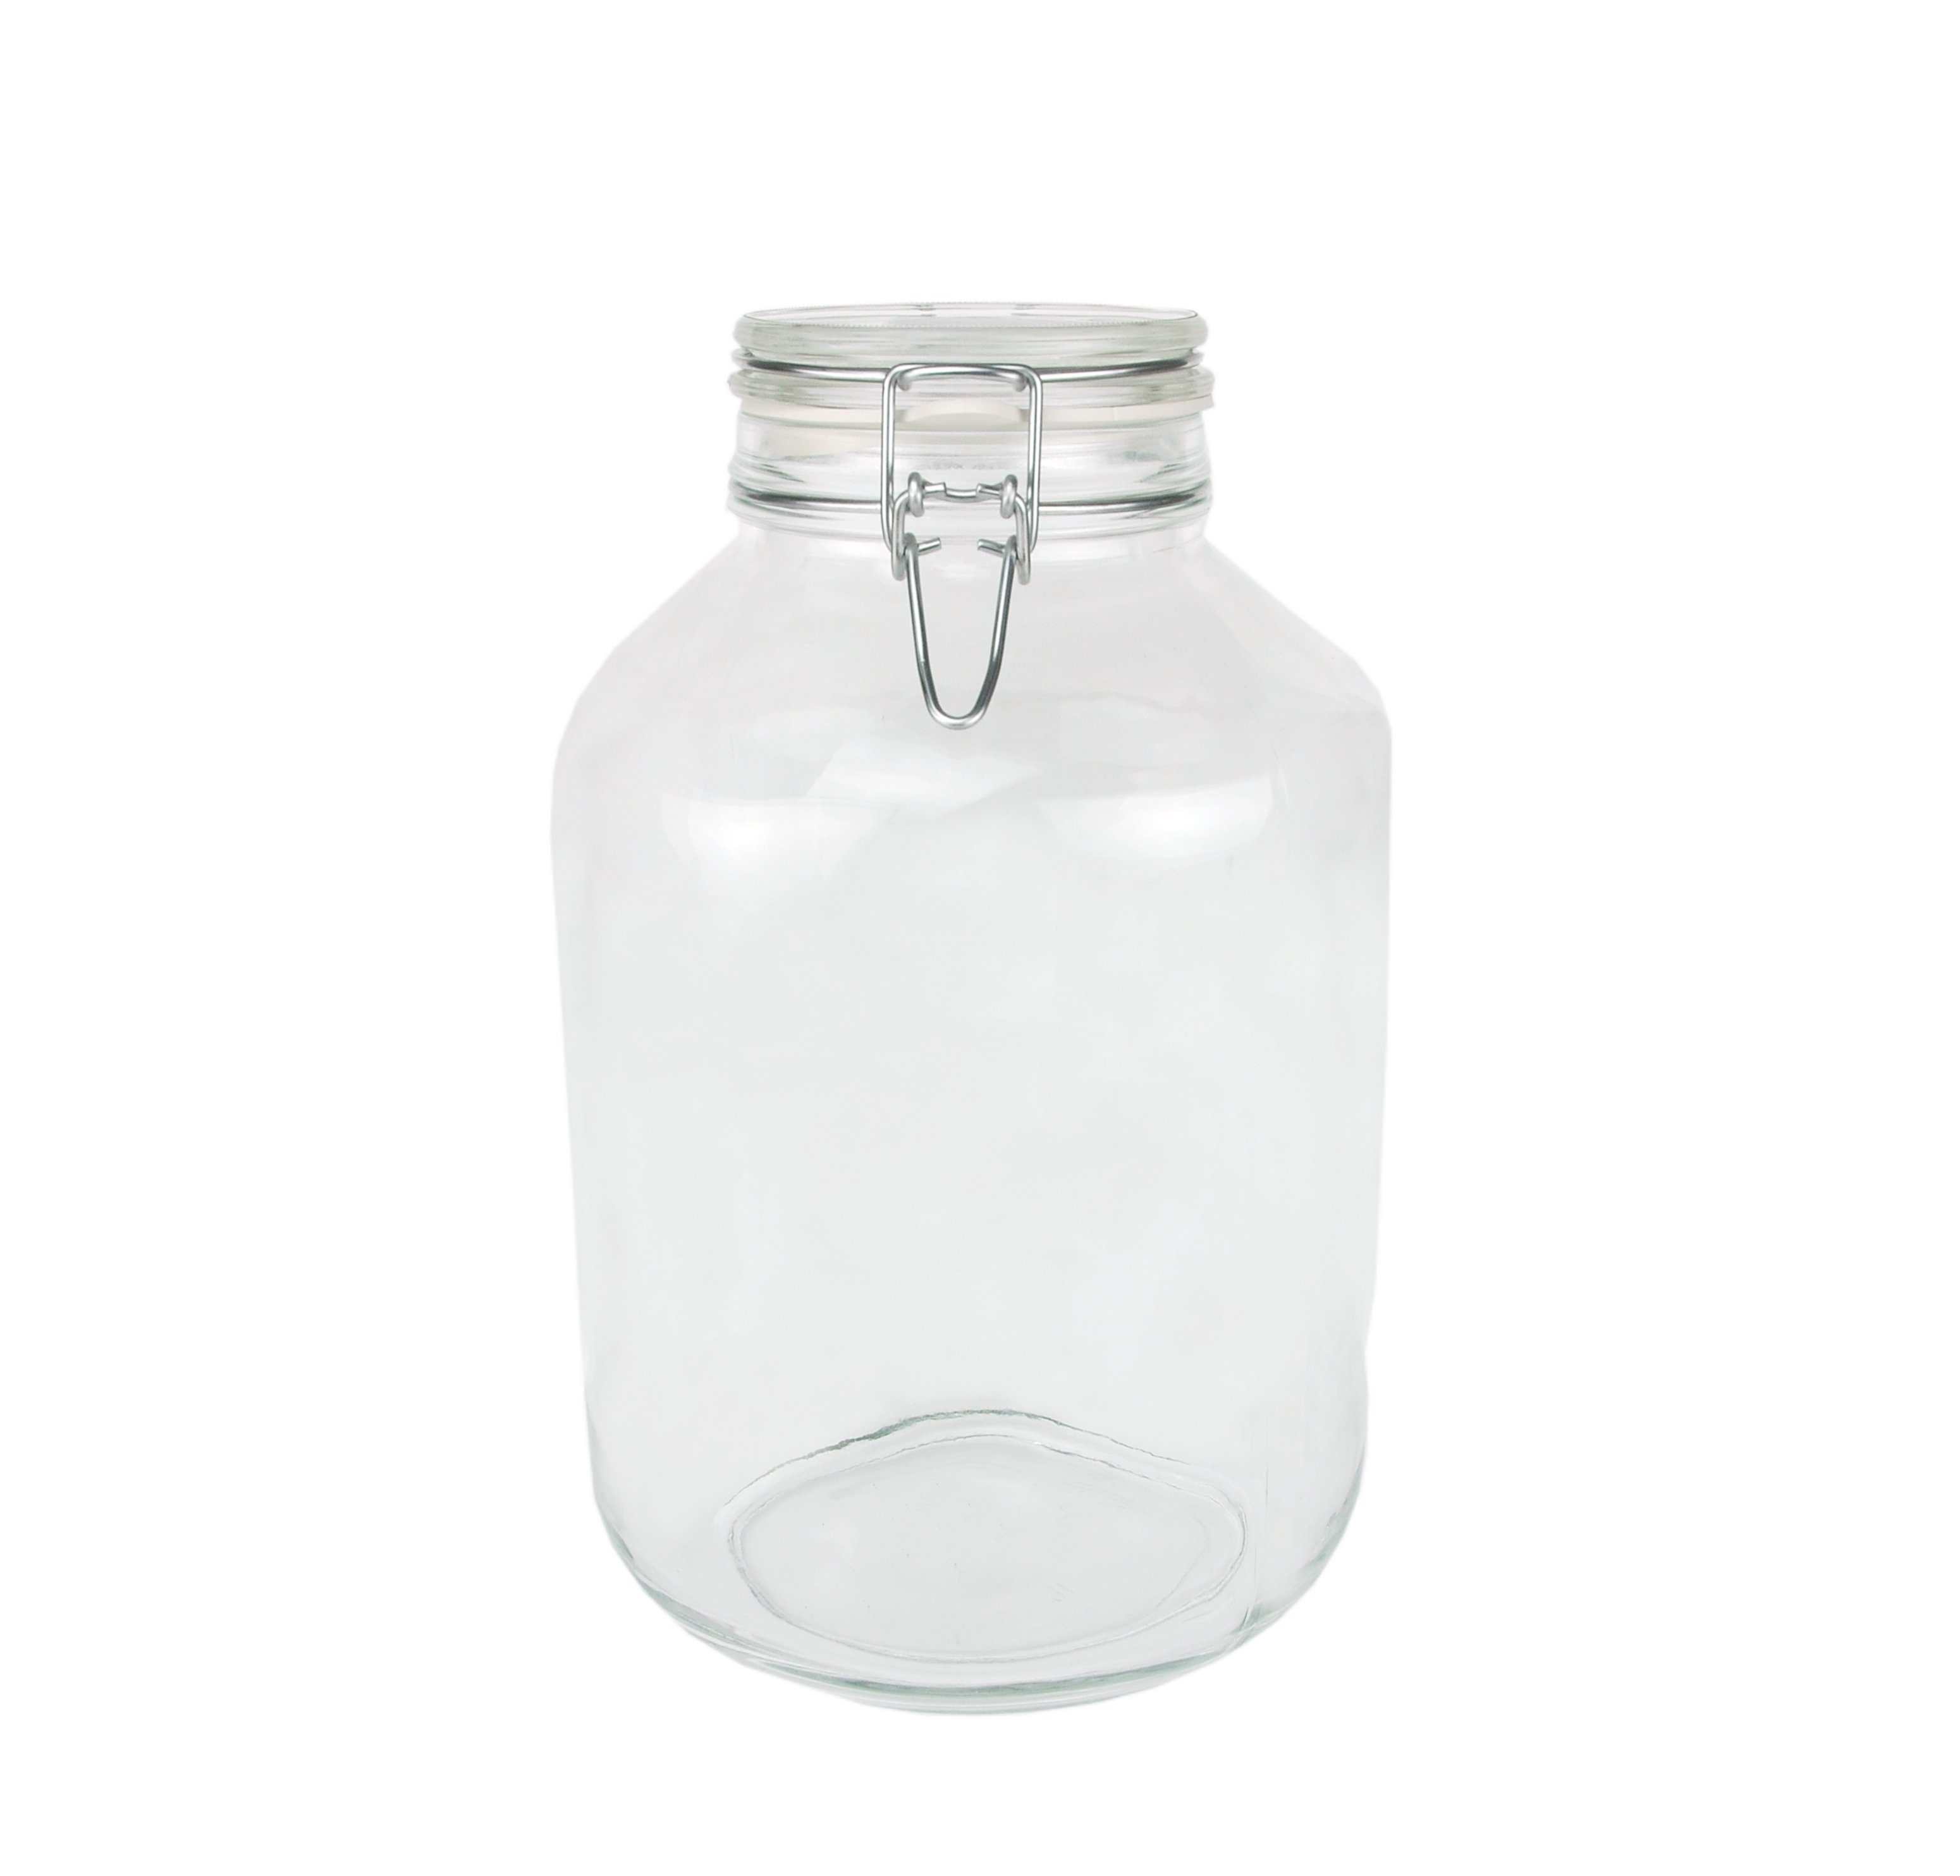 Vorratsglas 5,0L Glas Original MamboCat Fido incl Rezeptheft, Bügelverschluss 2er Set Einmachglas